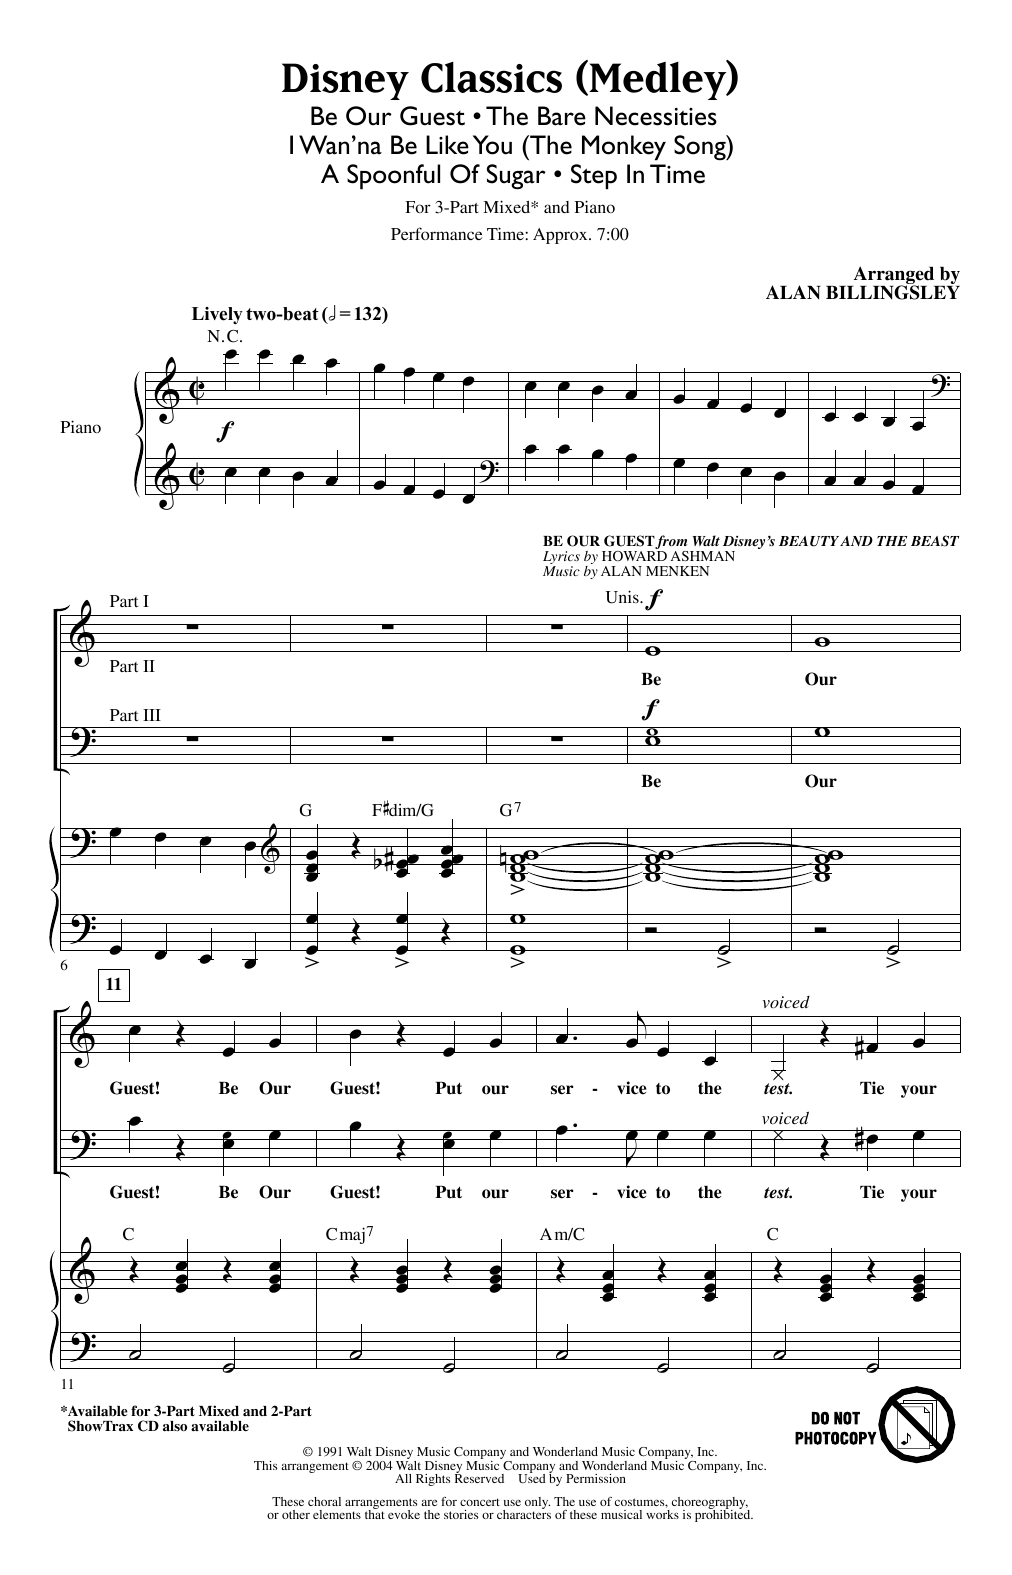 Alan Billingsley Disney Classics (Medley) sheet music notes and chords arranged for 2-Part Choir